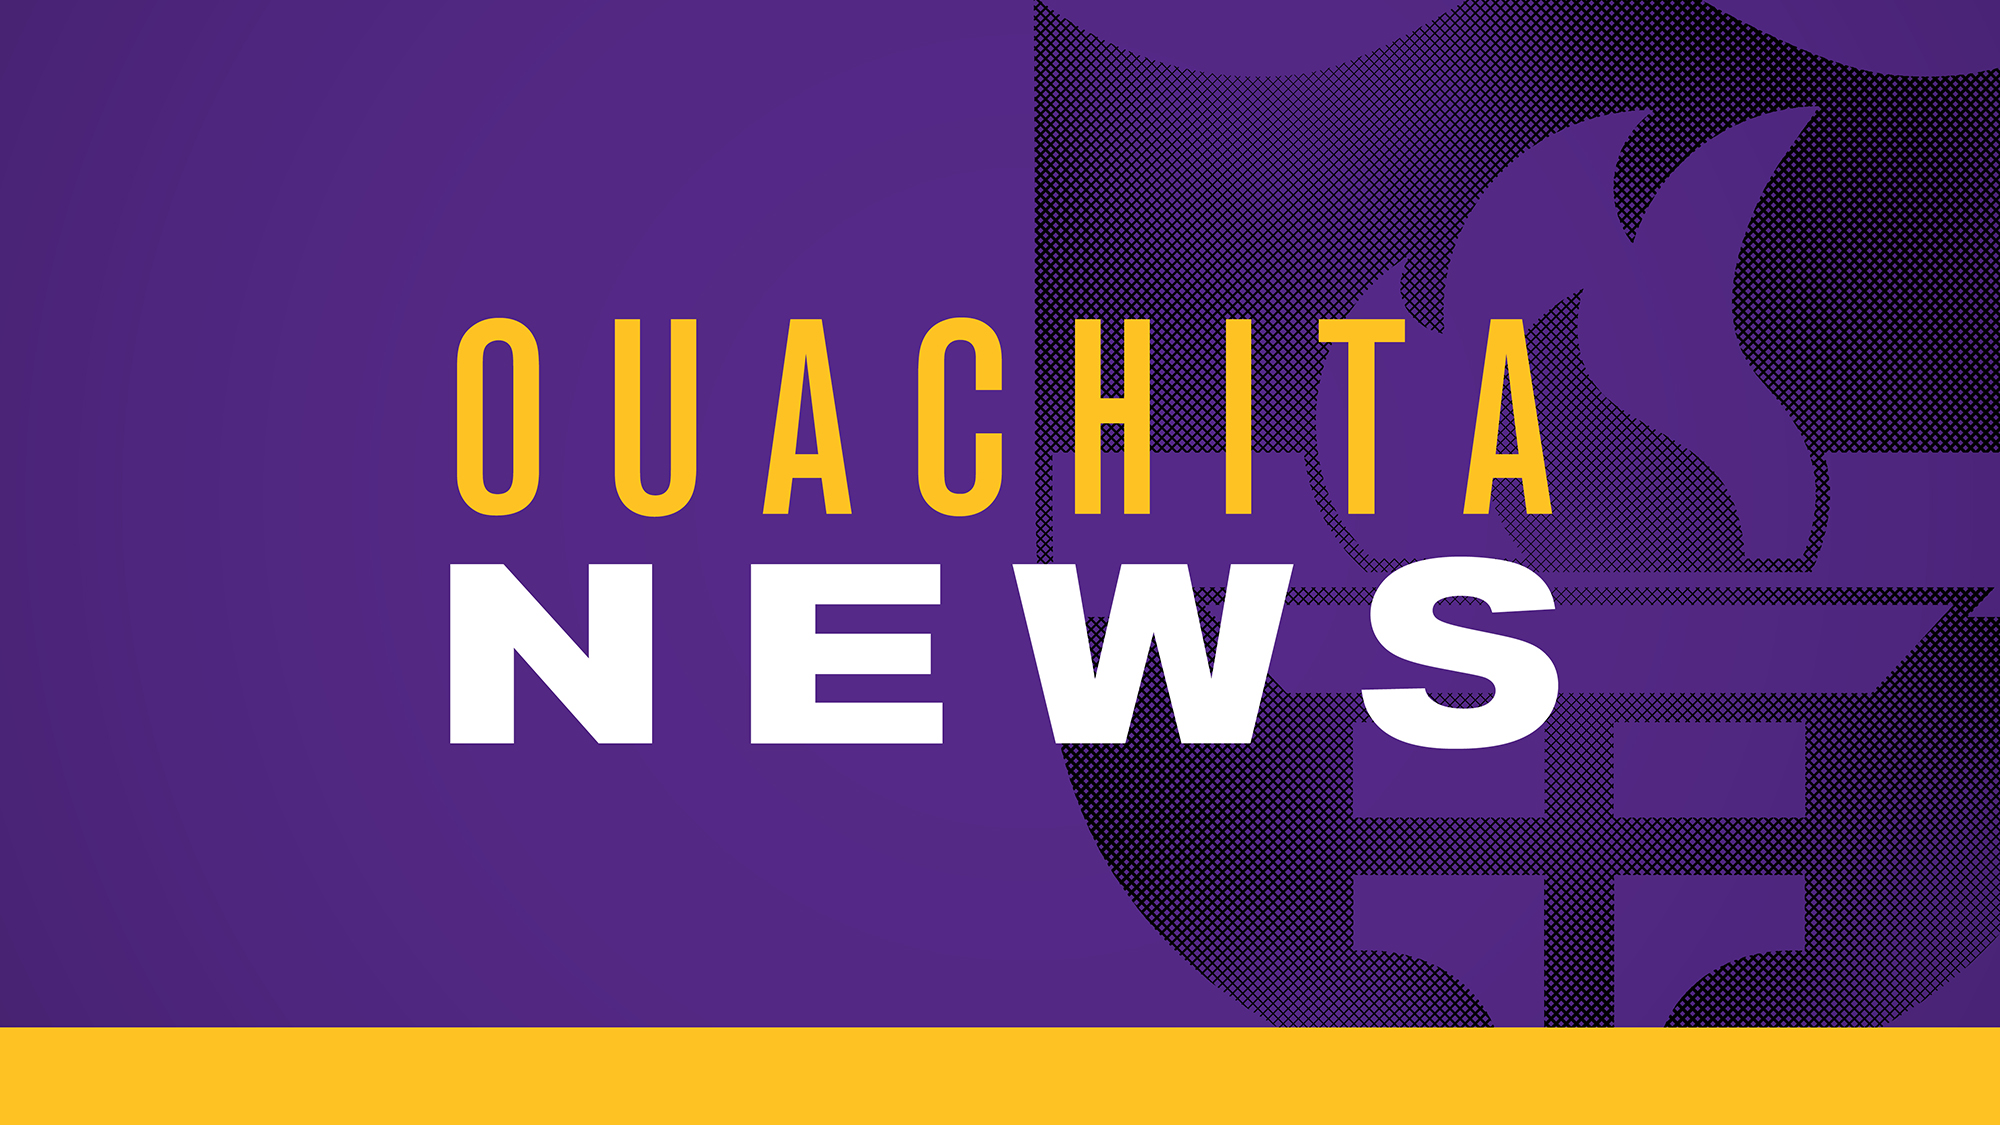 Ouachita news graphic